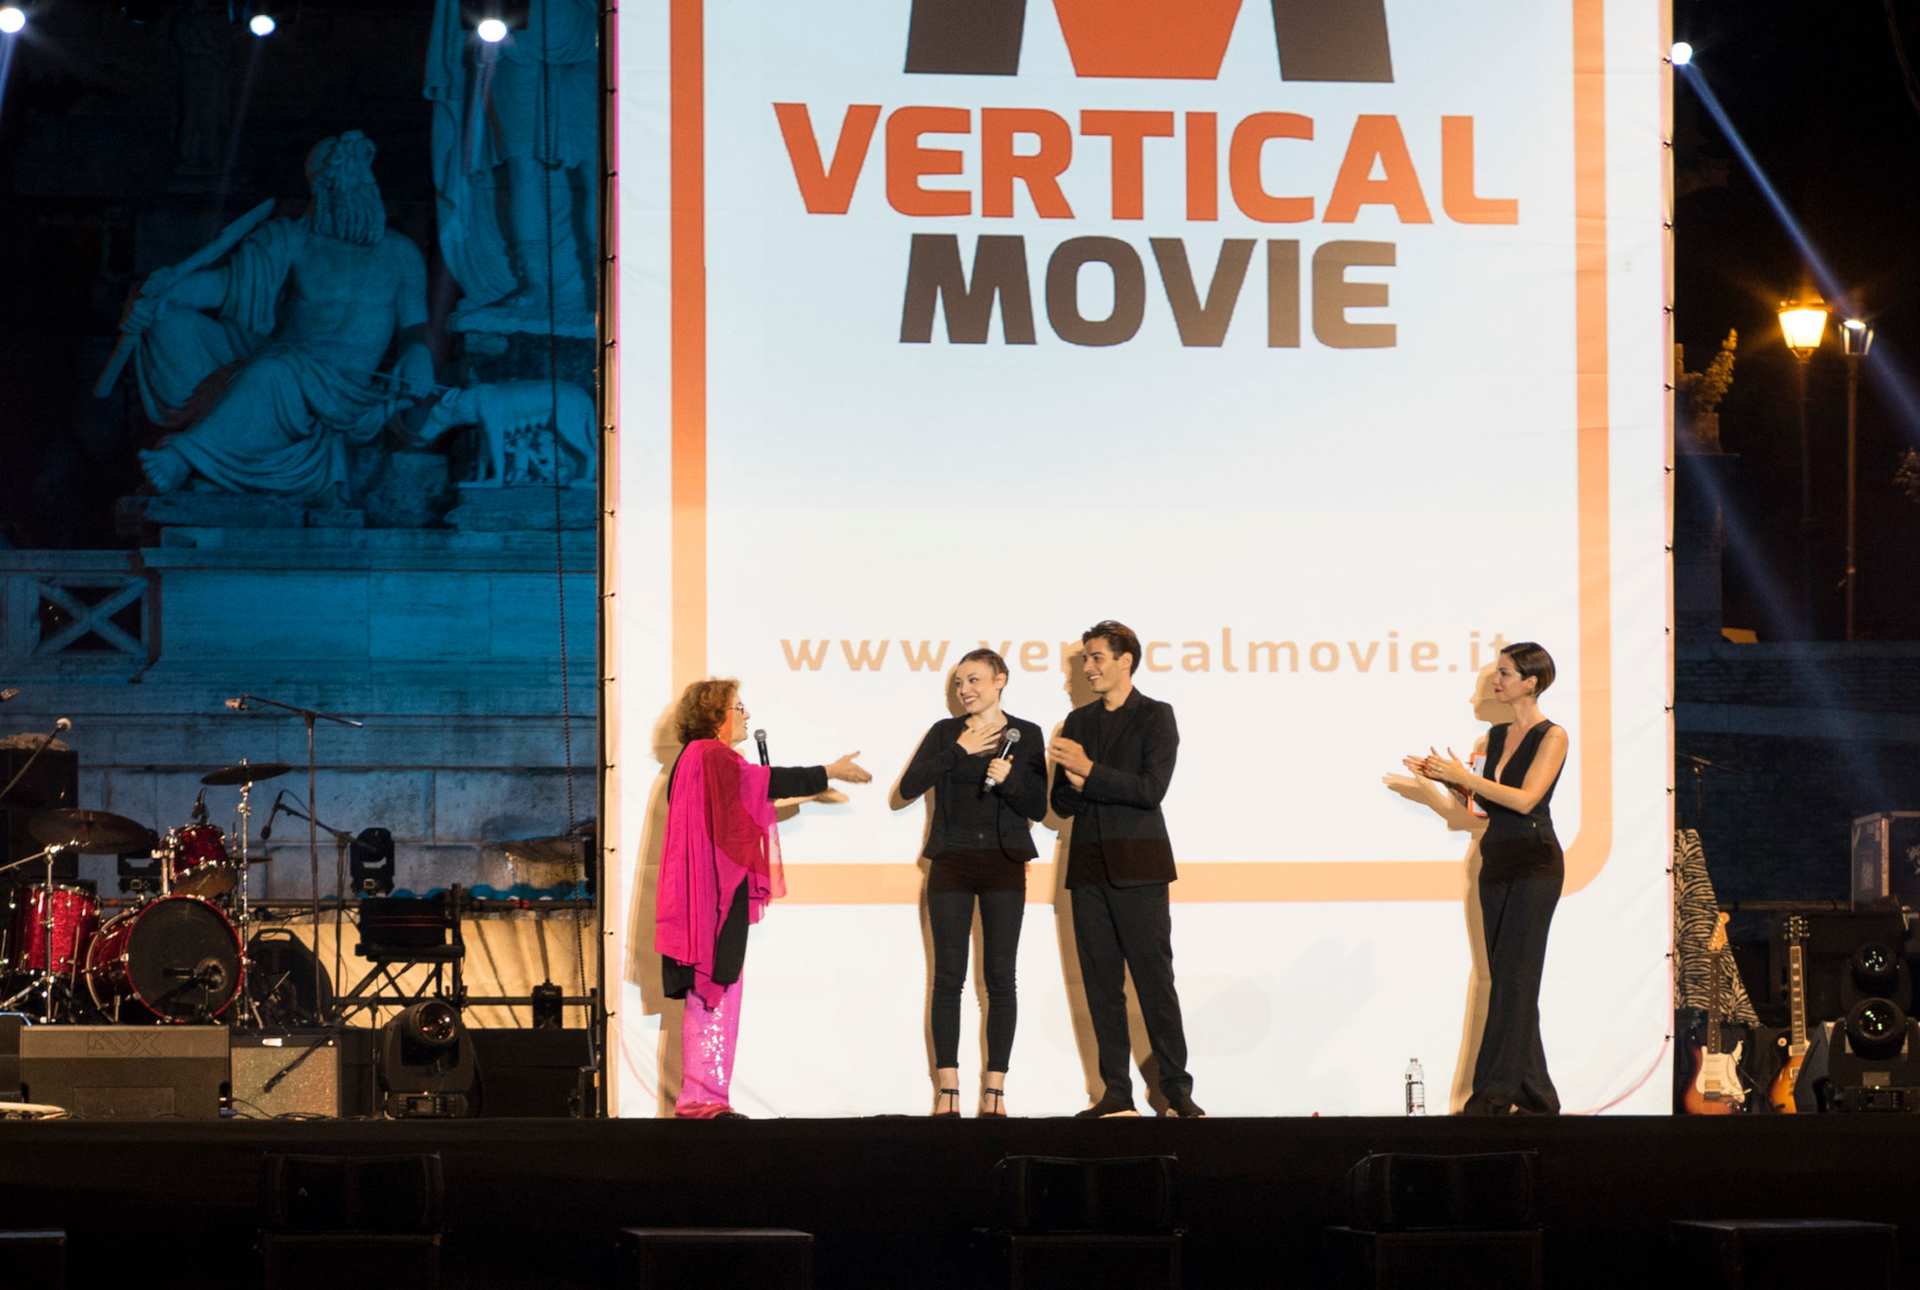 VMF Festival del Cinema in verticale